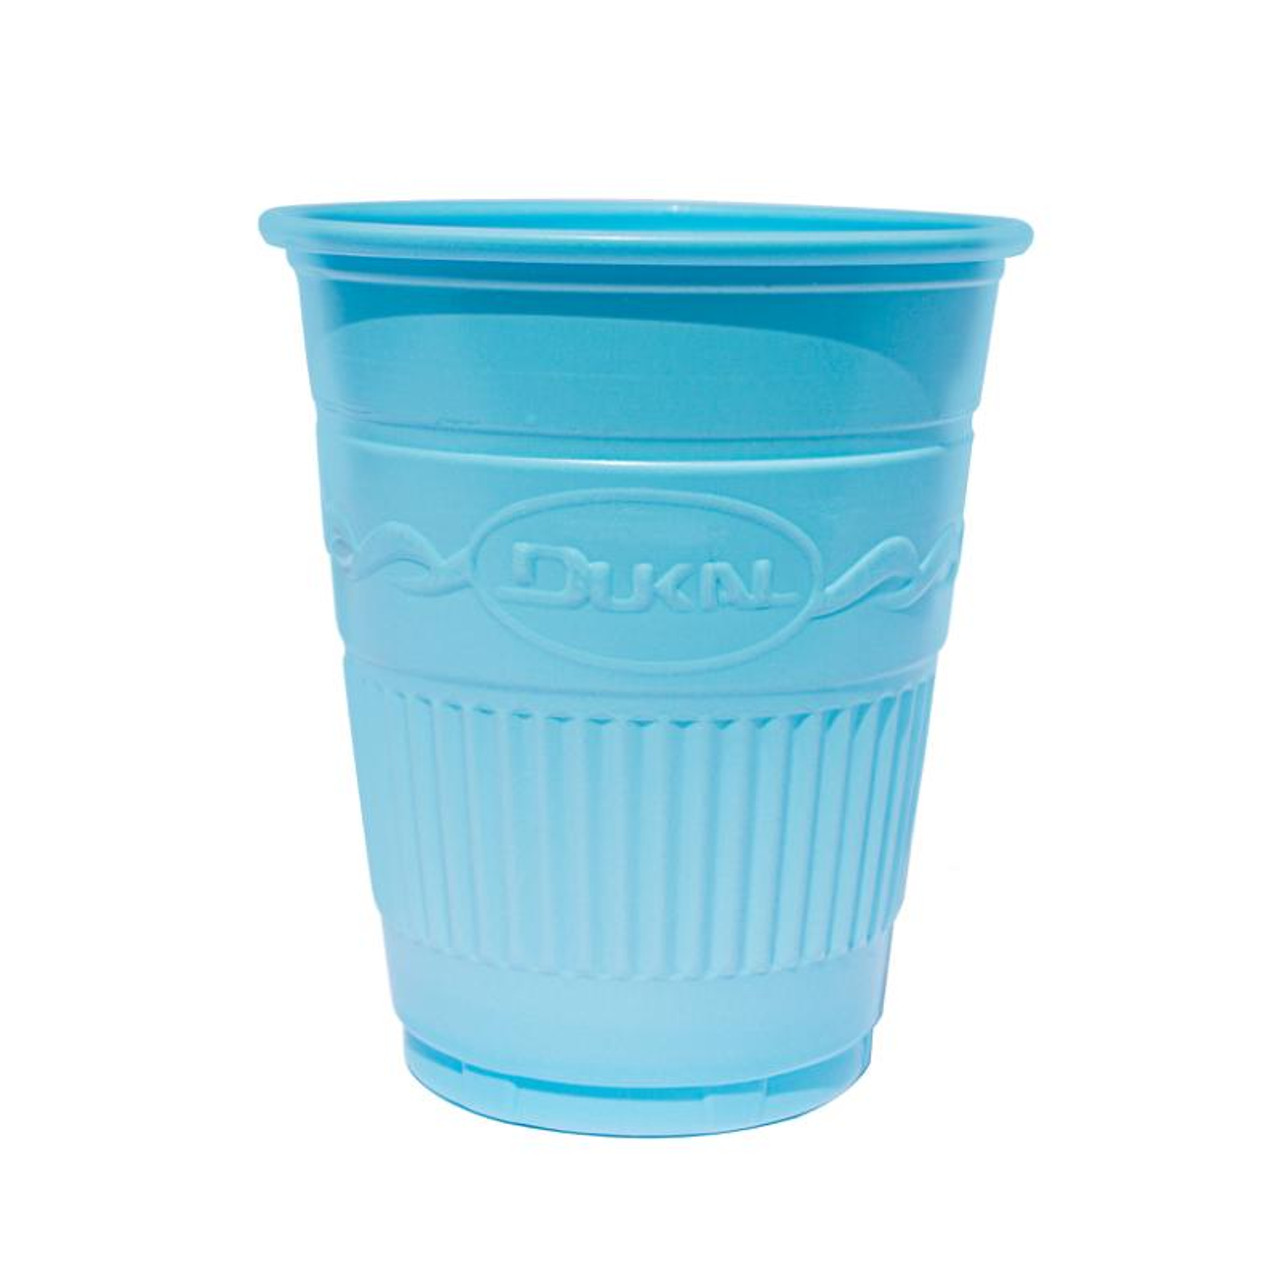 Dukal Plastic Drinking Cups 5 oz. Blue 1000/cs